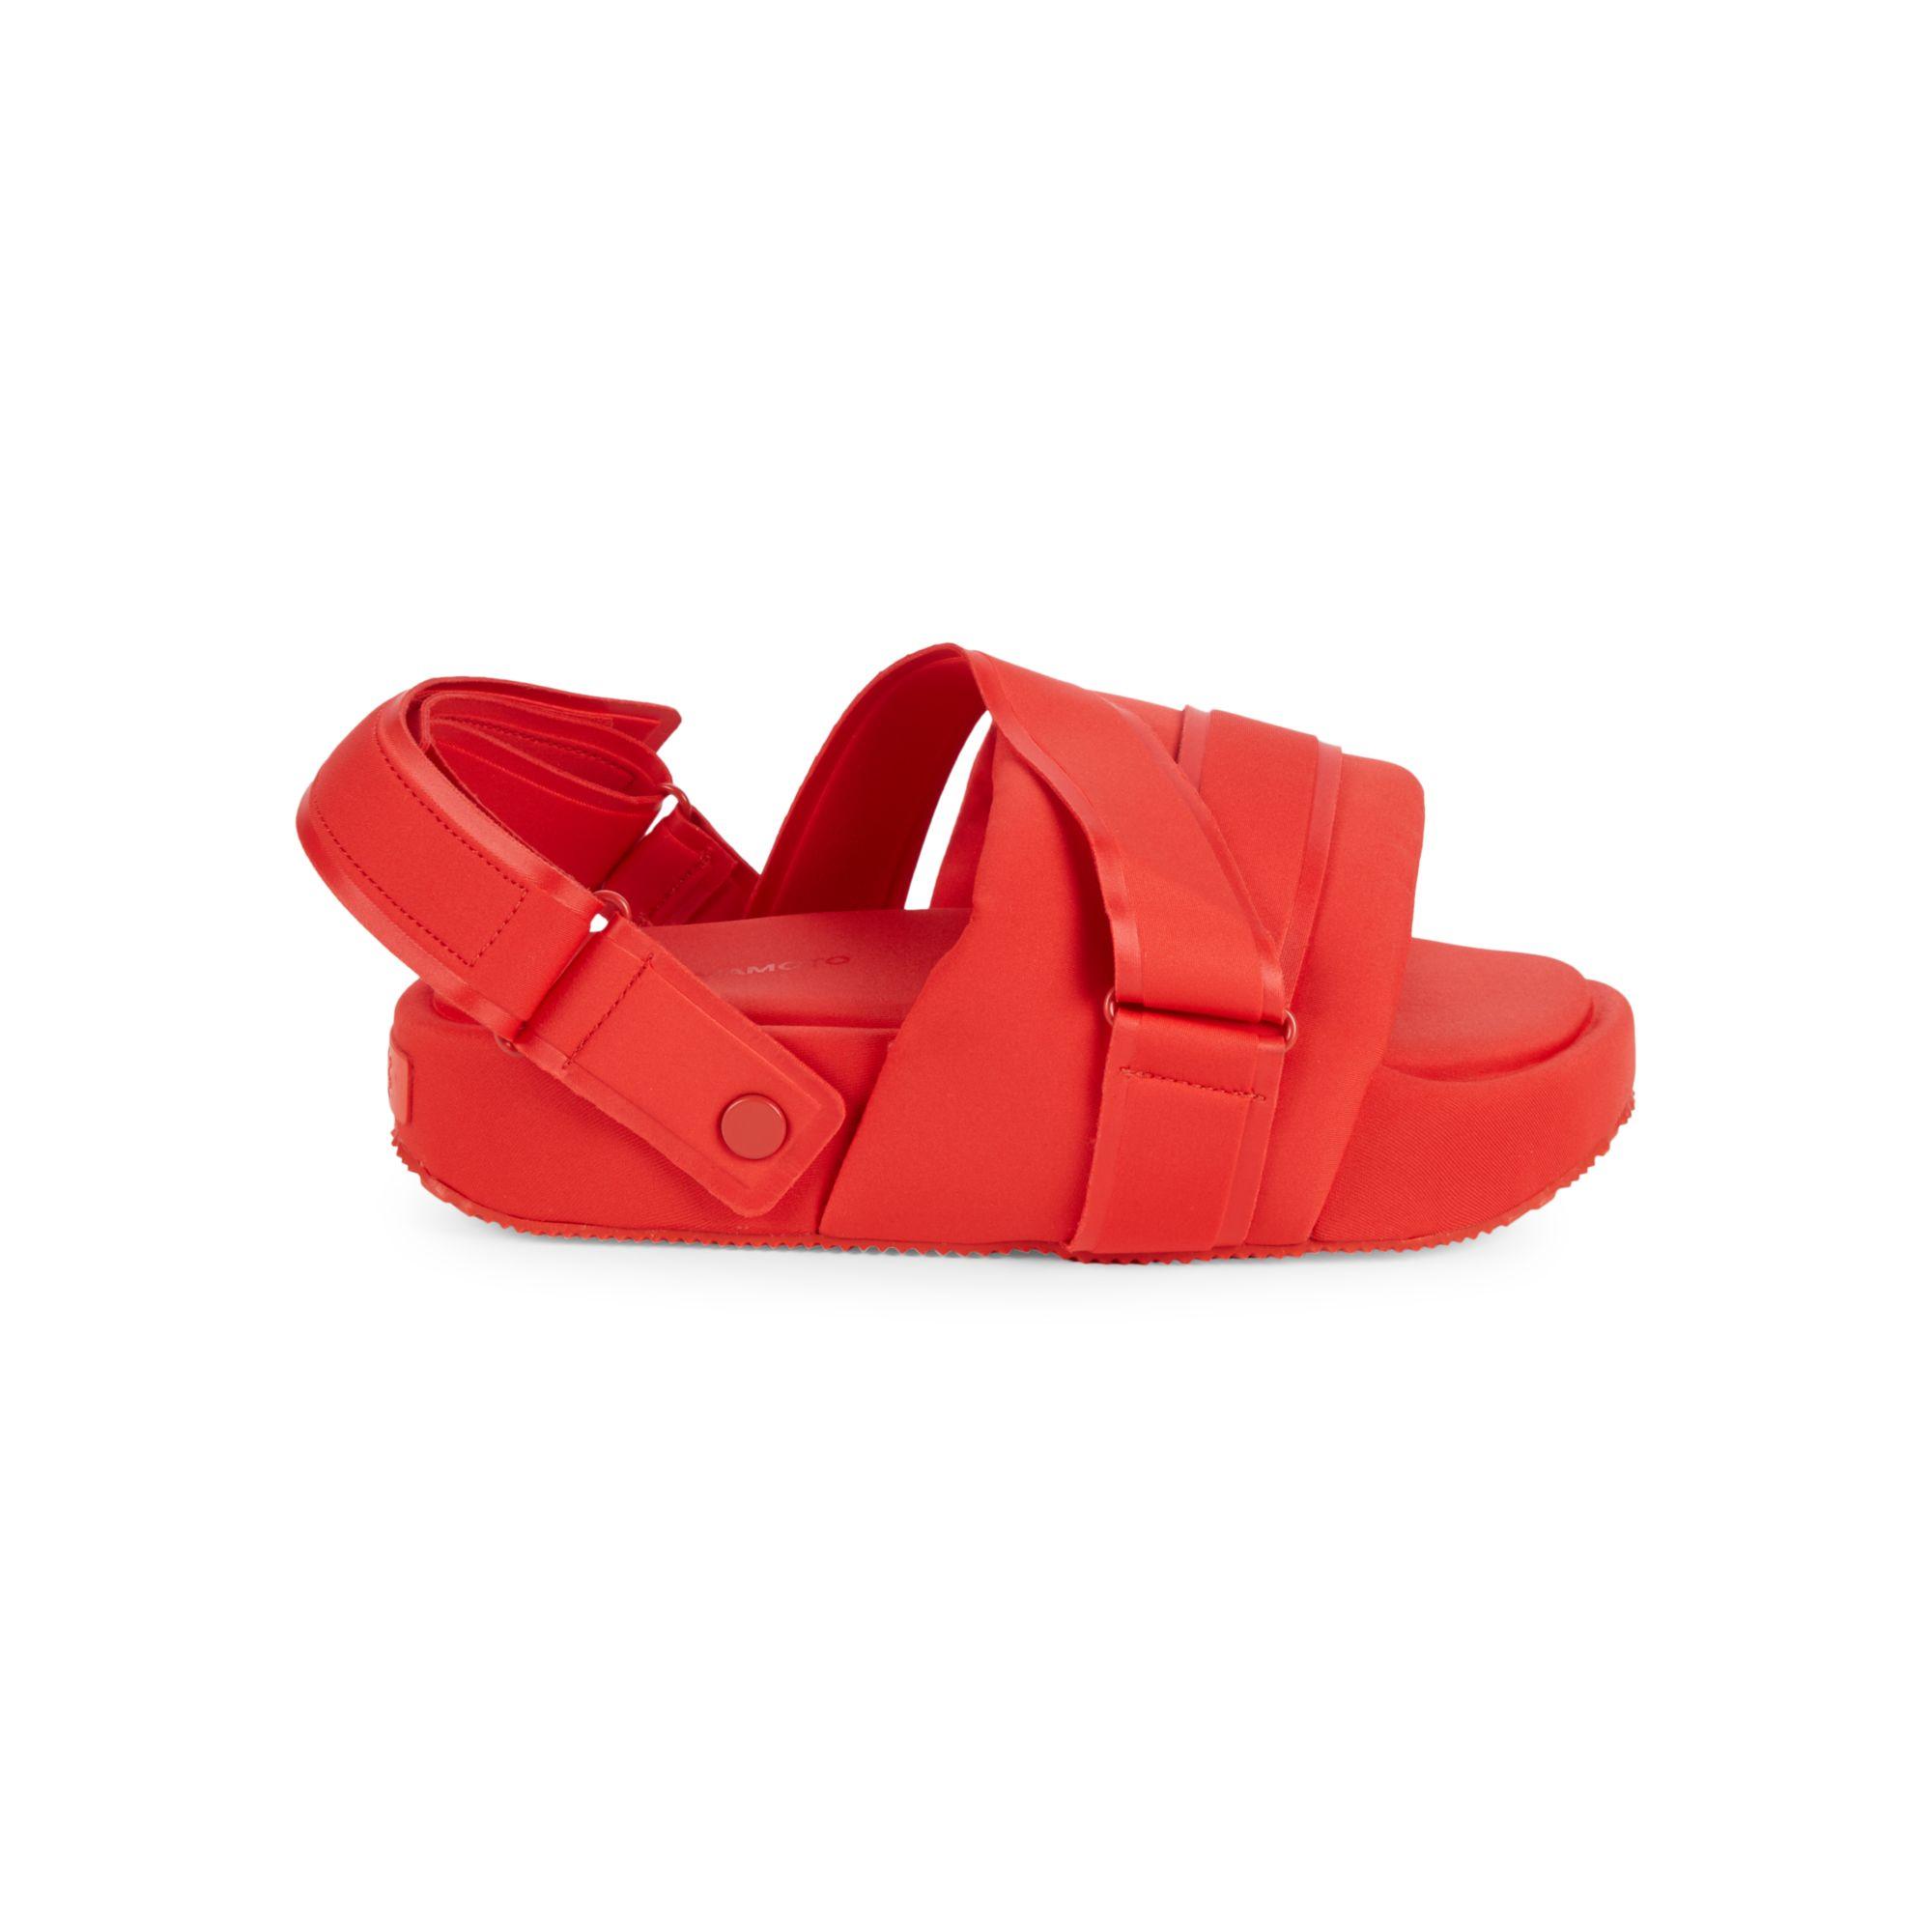 Yohji Yamamoto Y-3 Platform Sandals in Red for Men - Lyst